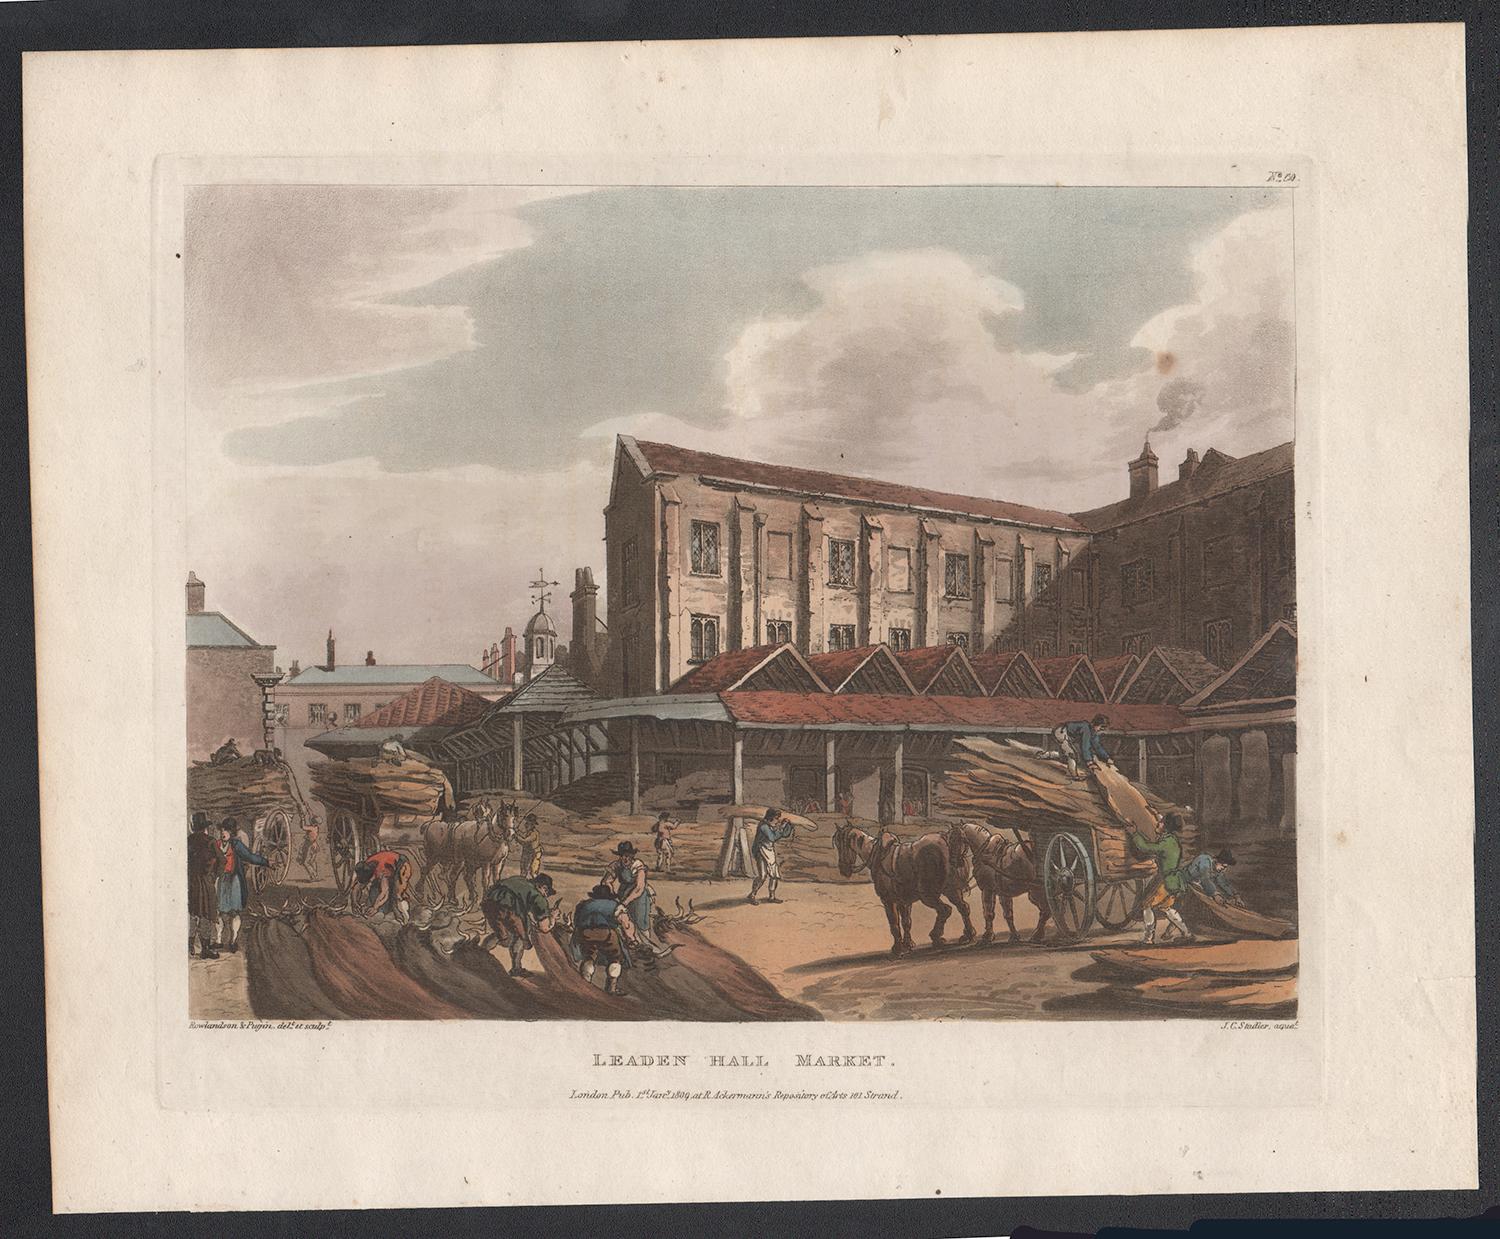 Leaden Hall Market, London, colour aquatint, 1809, after Thomas Rowlandson - Print by Unknown